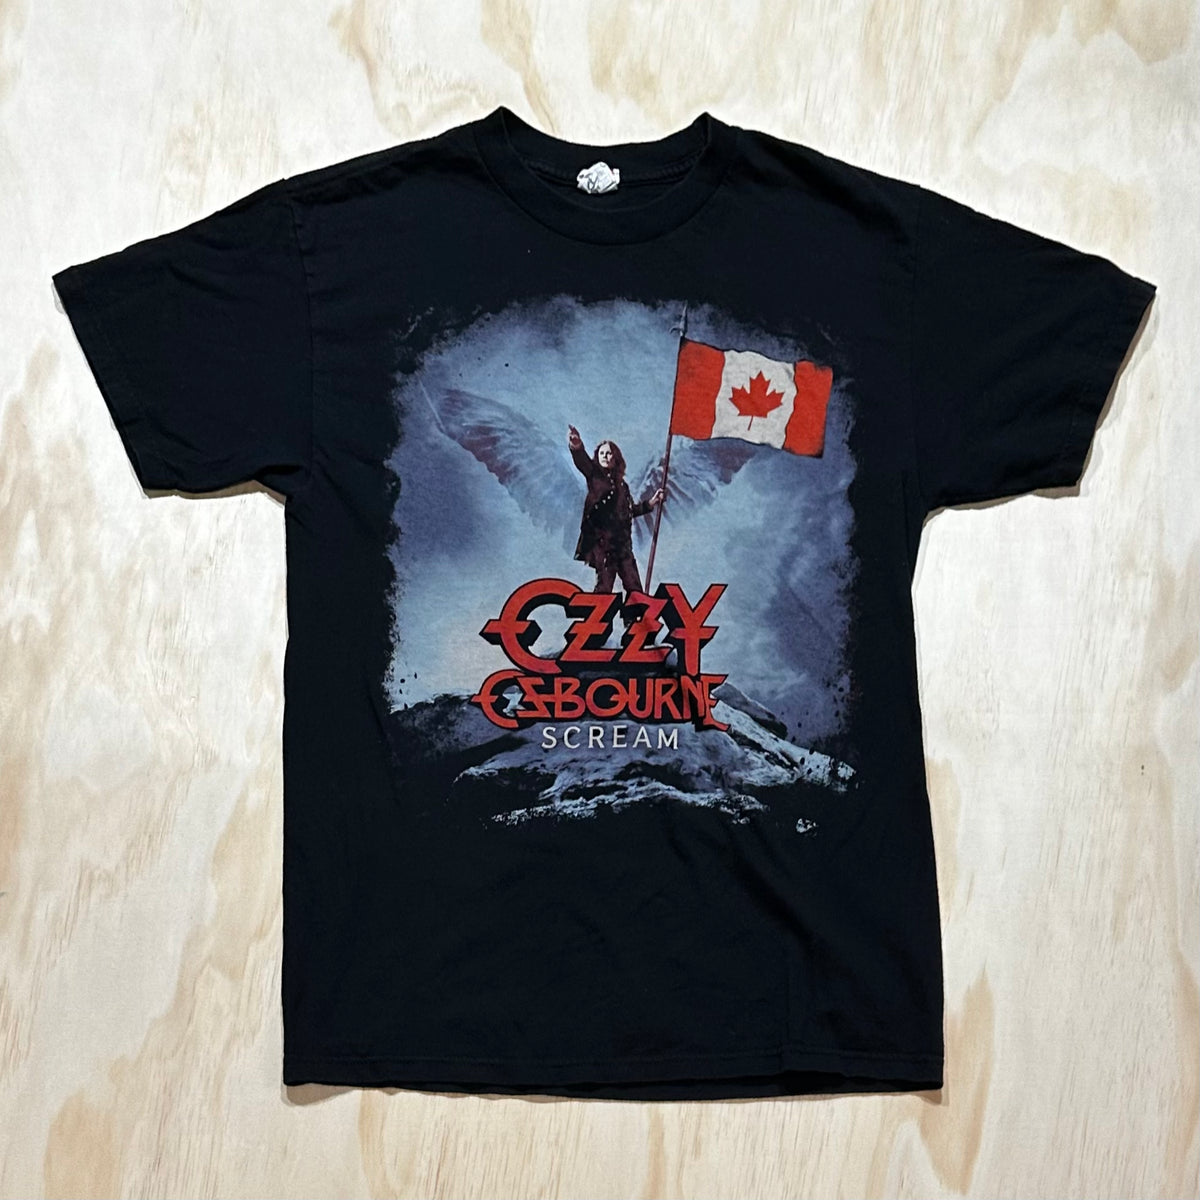 2010 Ozzy Osbourne Scream tour shirt